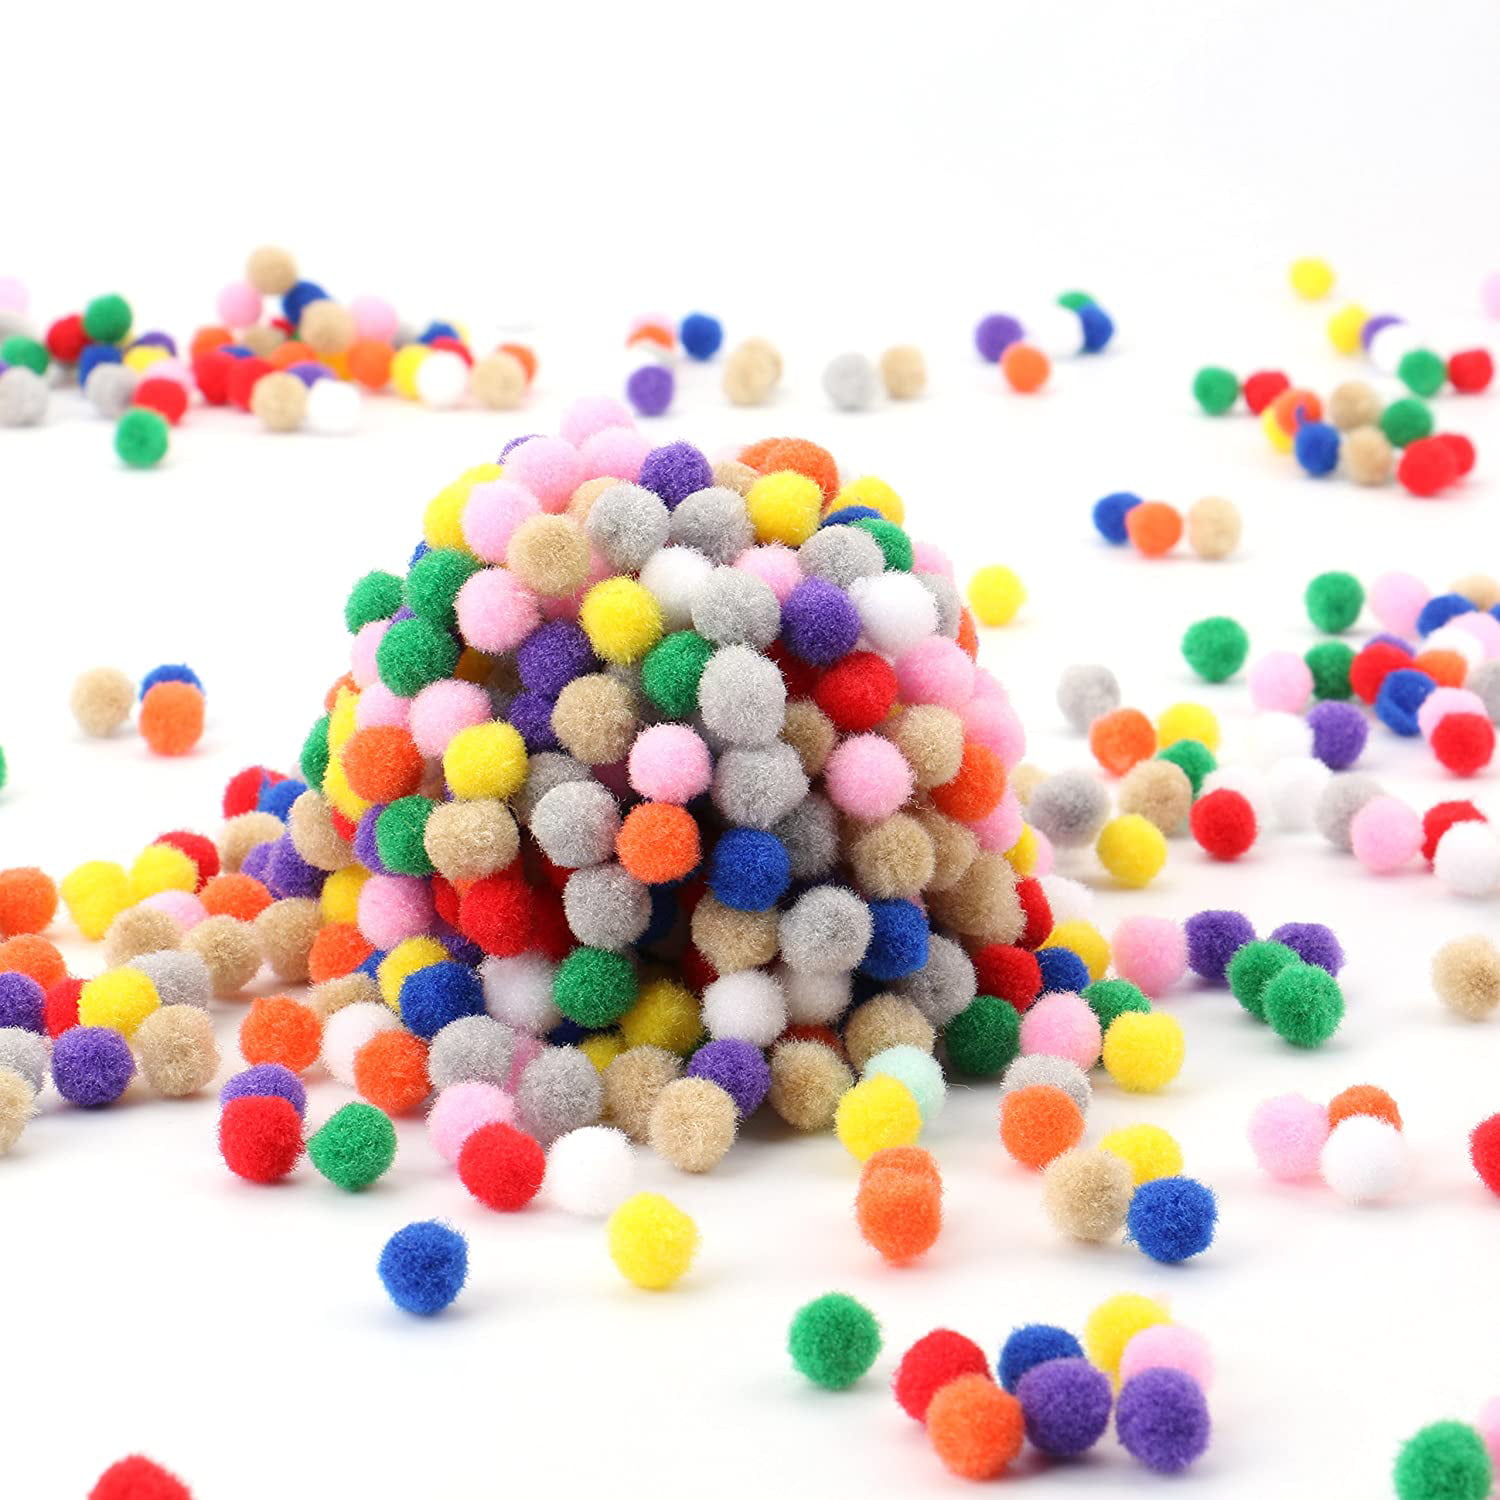 Tebery 2000 Pcs 1cm Multicolor Arts and Crafts Fuzzy Pom Poms Balls Assorted Pom Poms for DIY Creative Crafts Decorations 